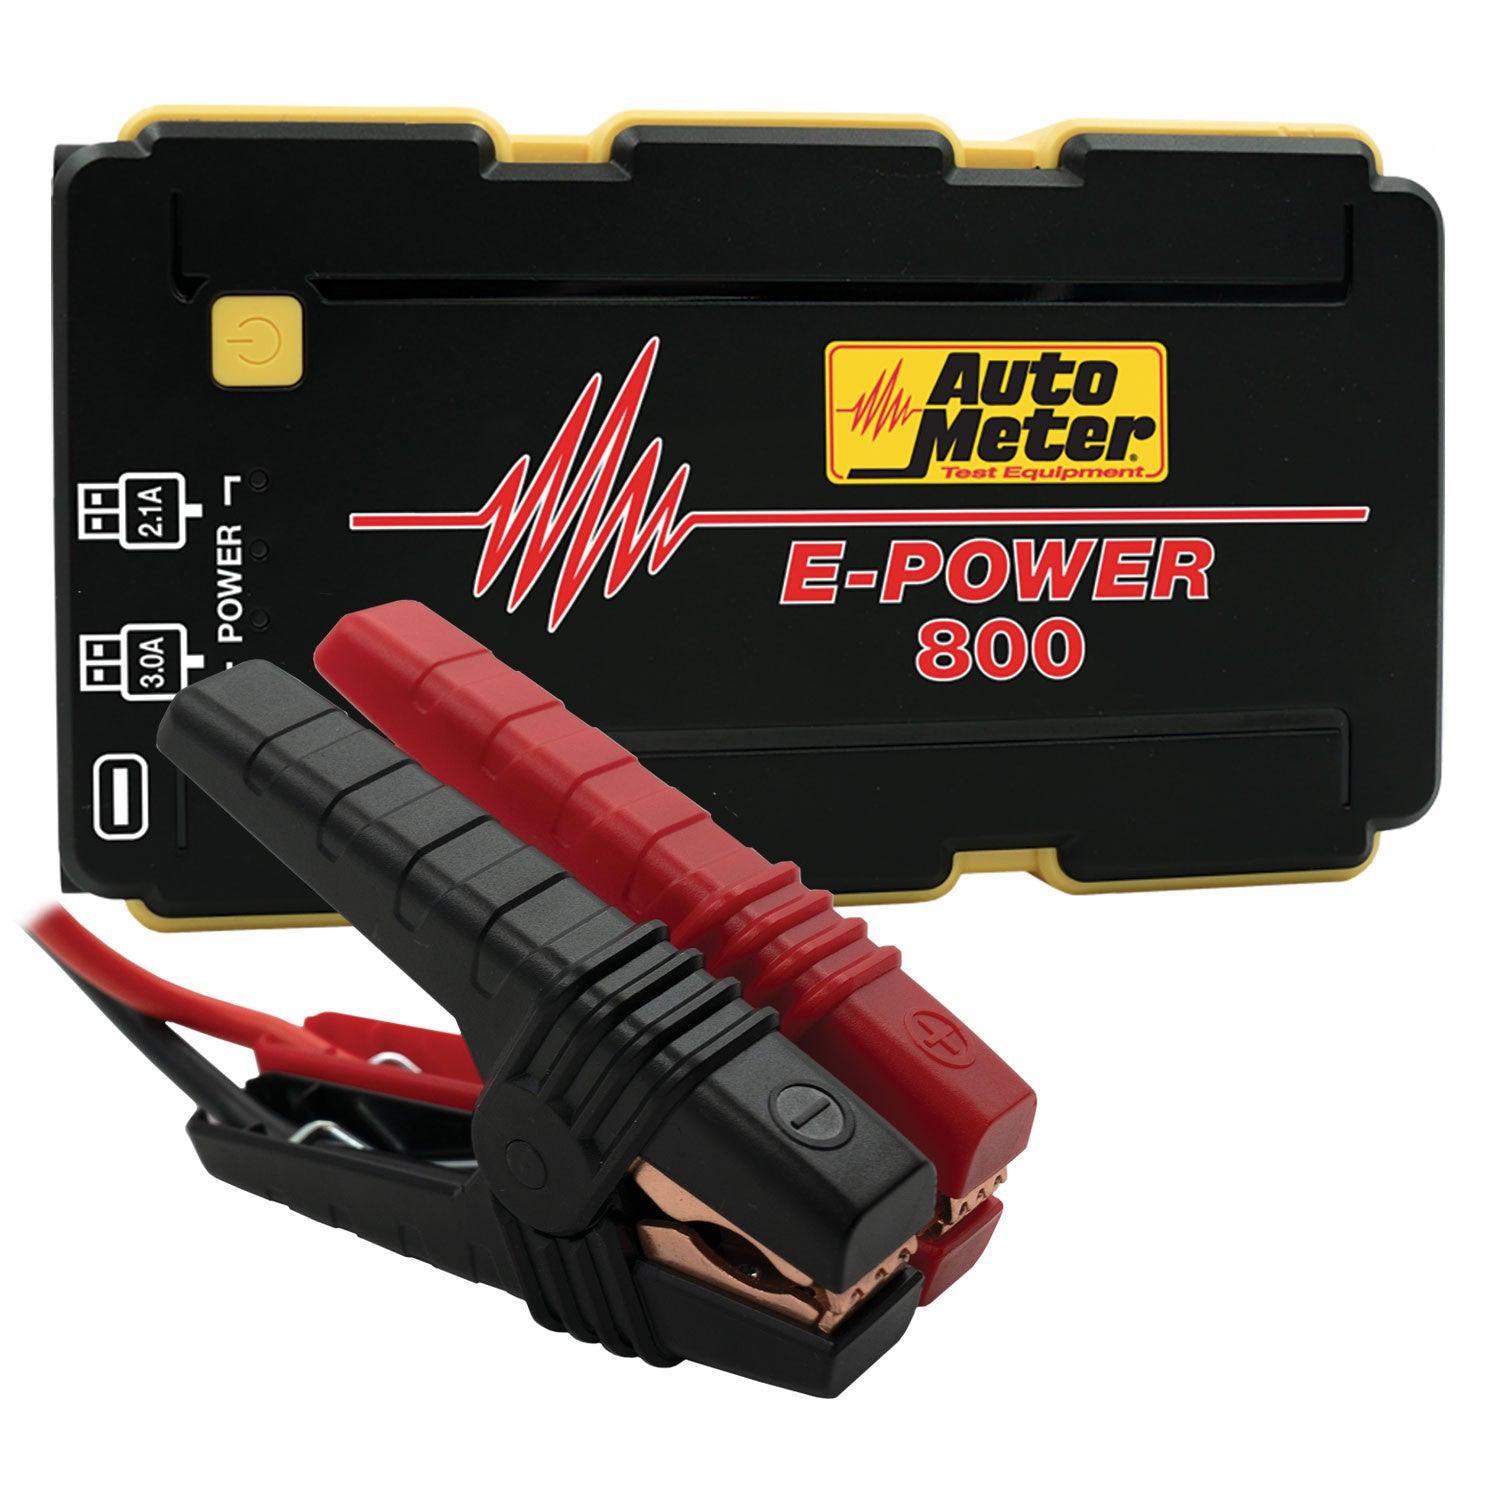 E-Power 800 - Emergency Power & Jump Starter - Burlile Performance Products